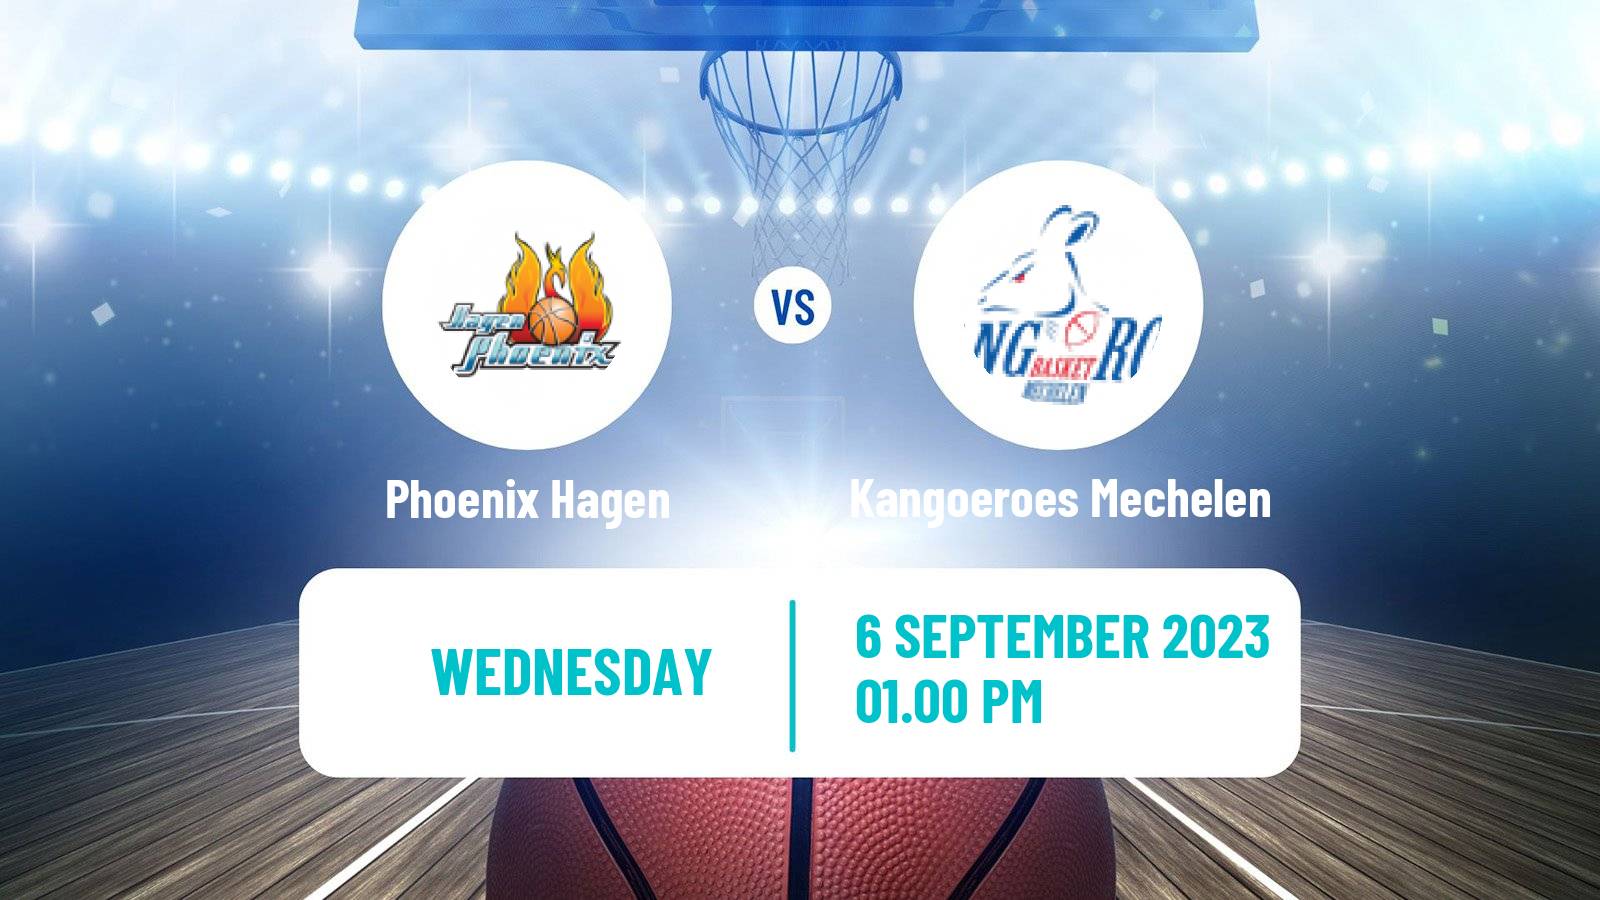 Basketball Club Friendly Basketball Phoenix Hagen - Kangoeroes Mechelen